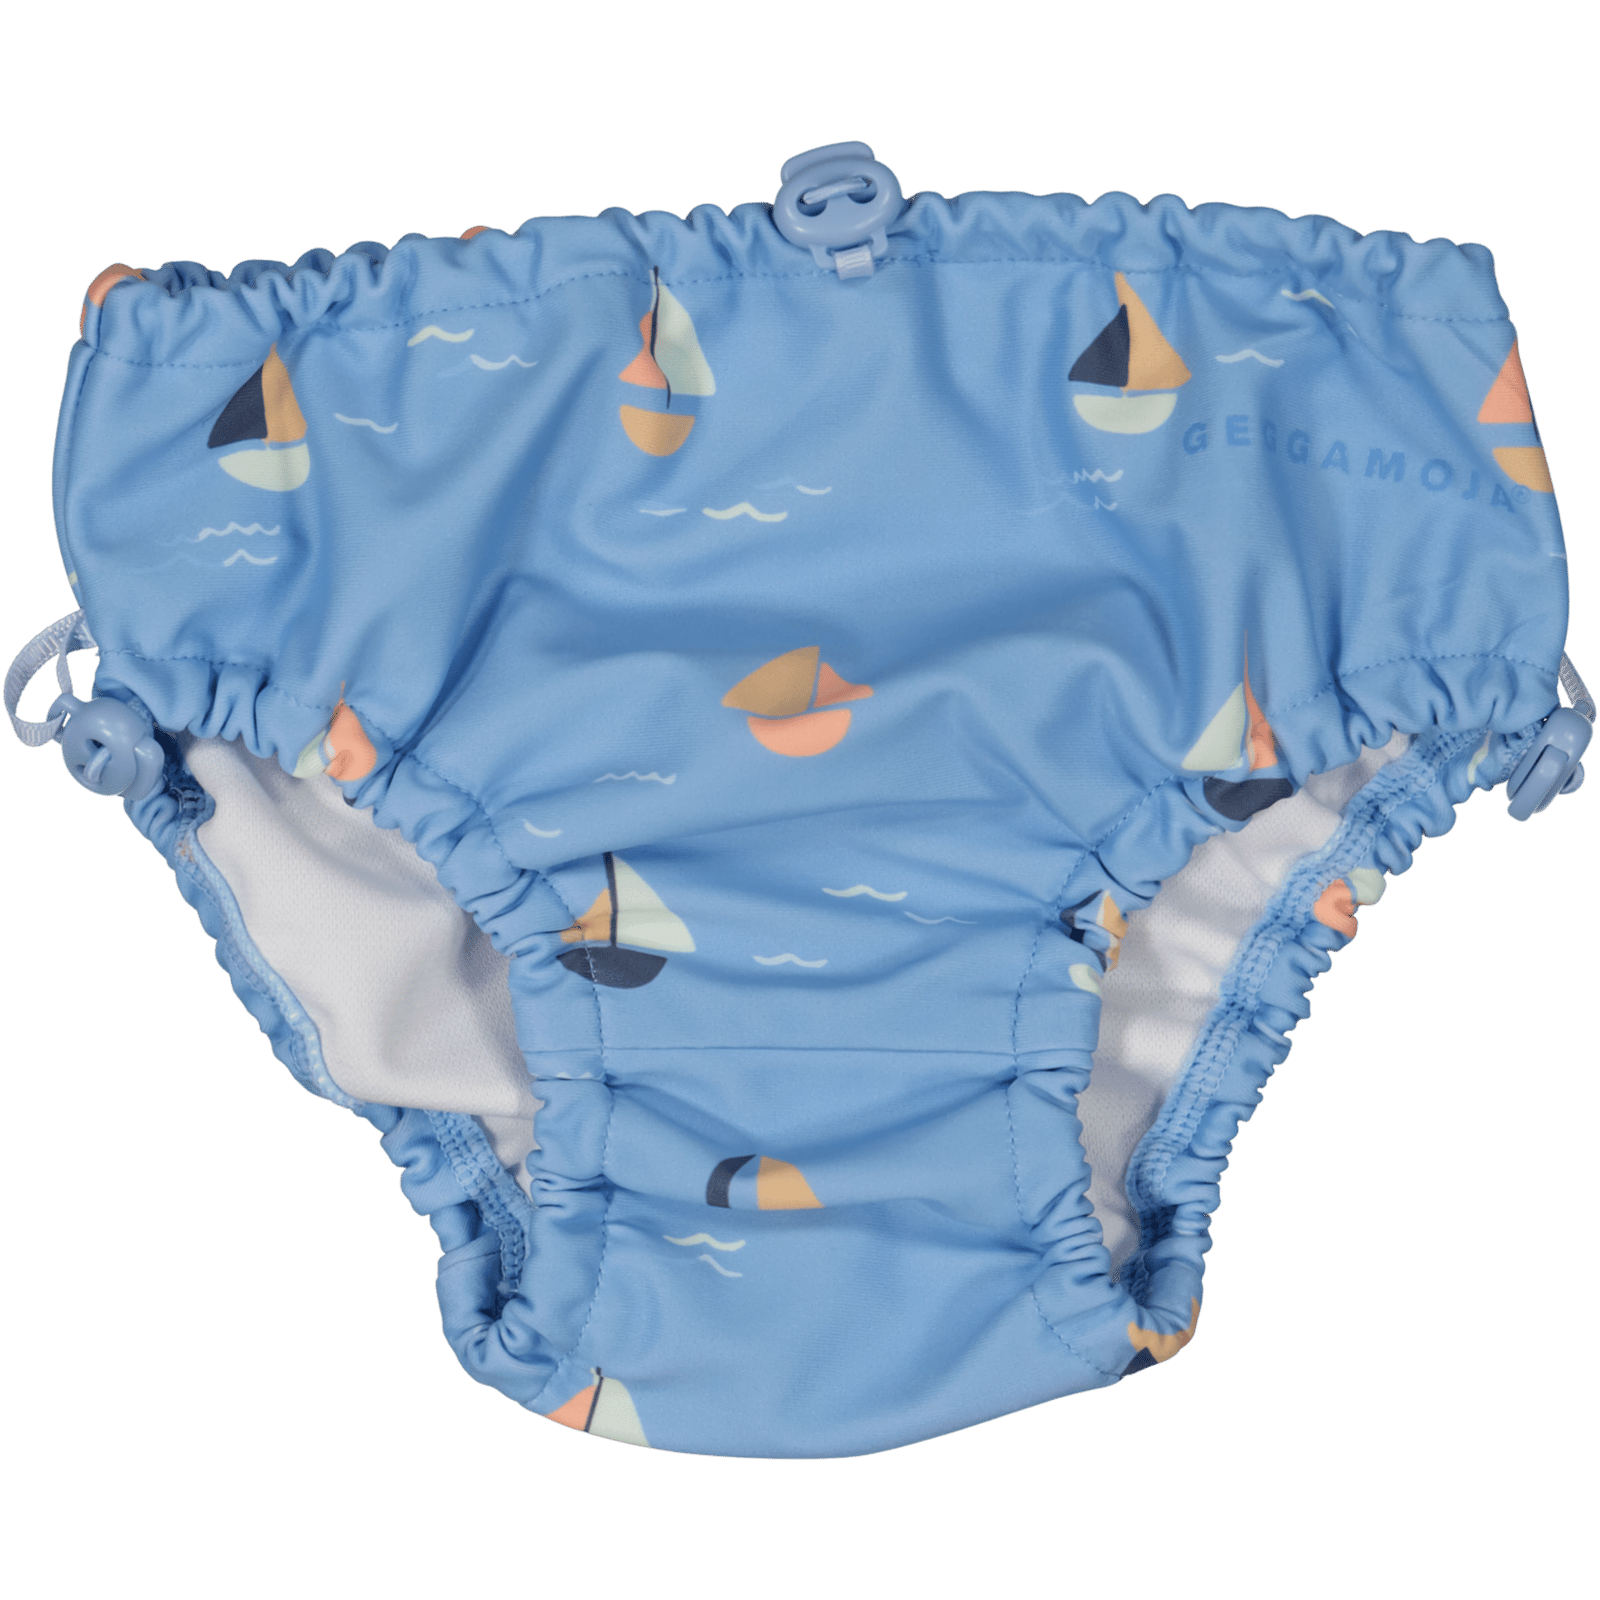 Geggamoja UV-Baby swim pants Light blue Sailor Stl  50/56